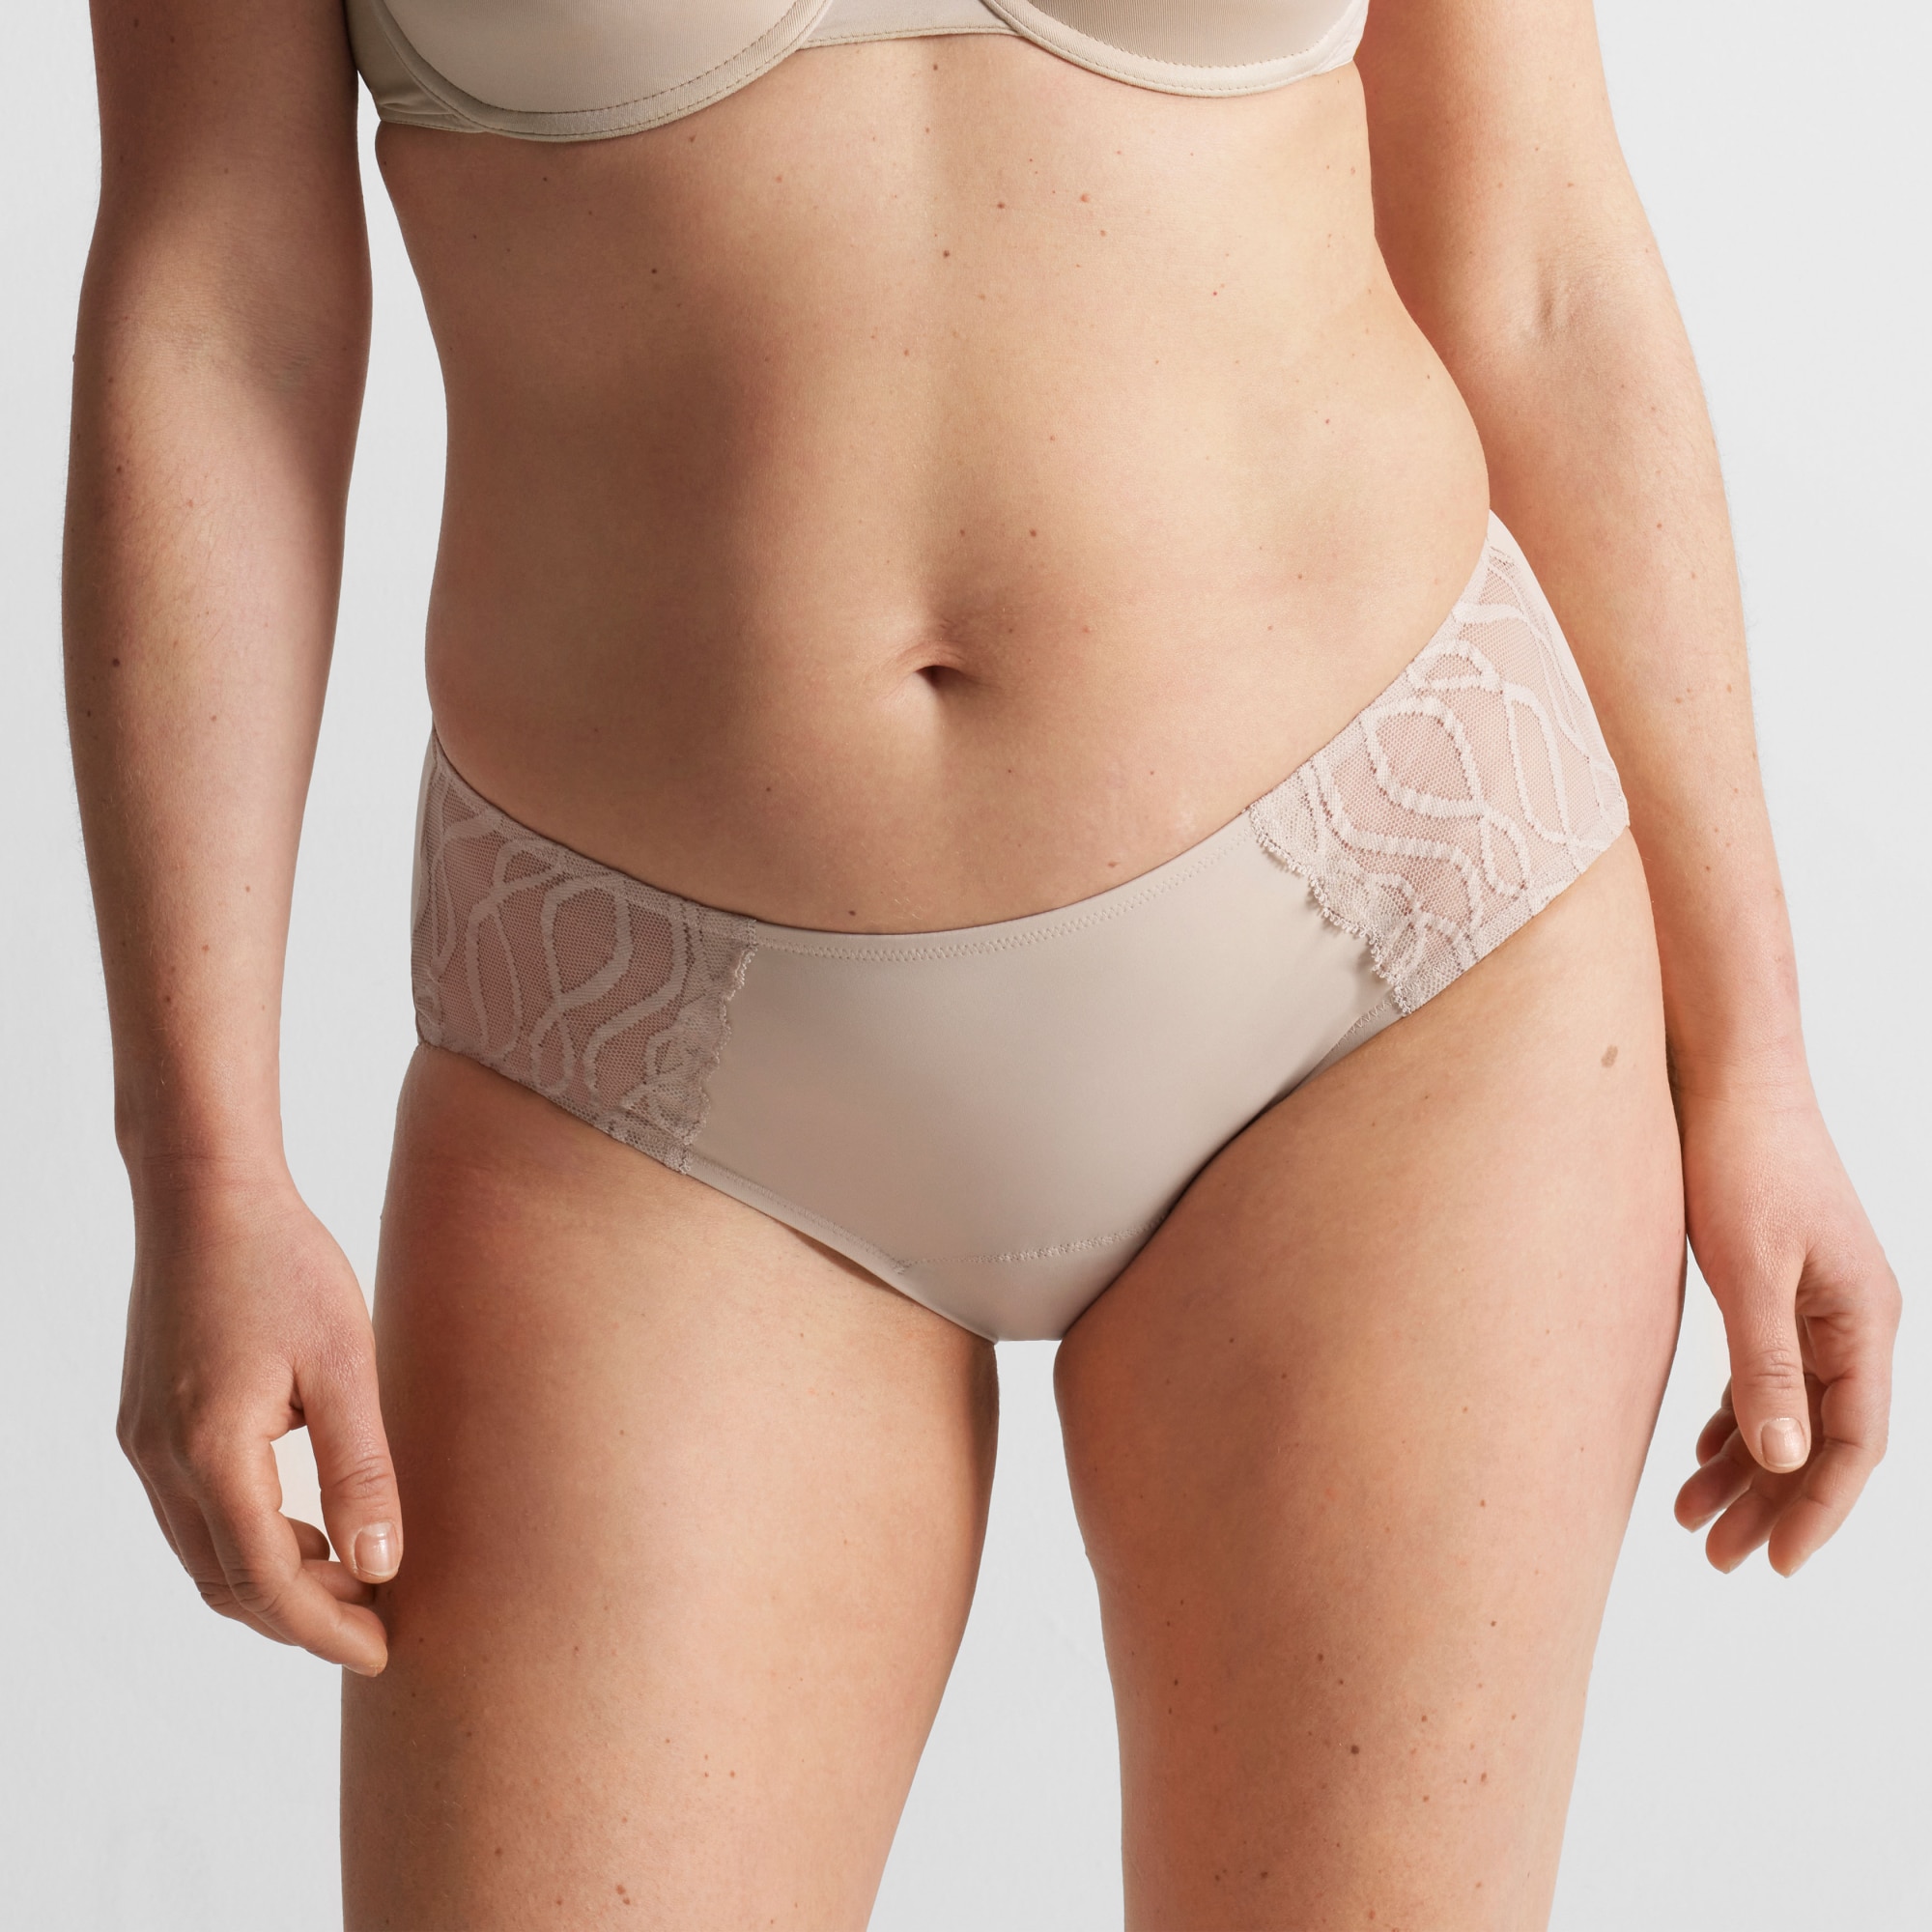 Wearever Women's Incontinence Underwear Reusable Maximum Bladder Control  Panties for Feminine Care, 3-Pack 